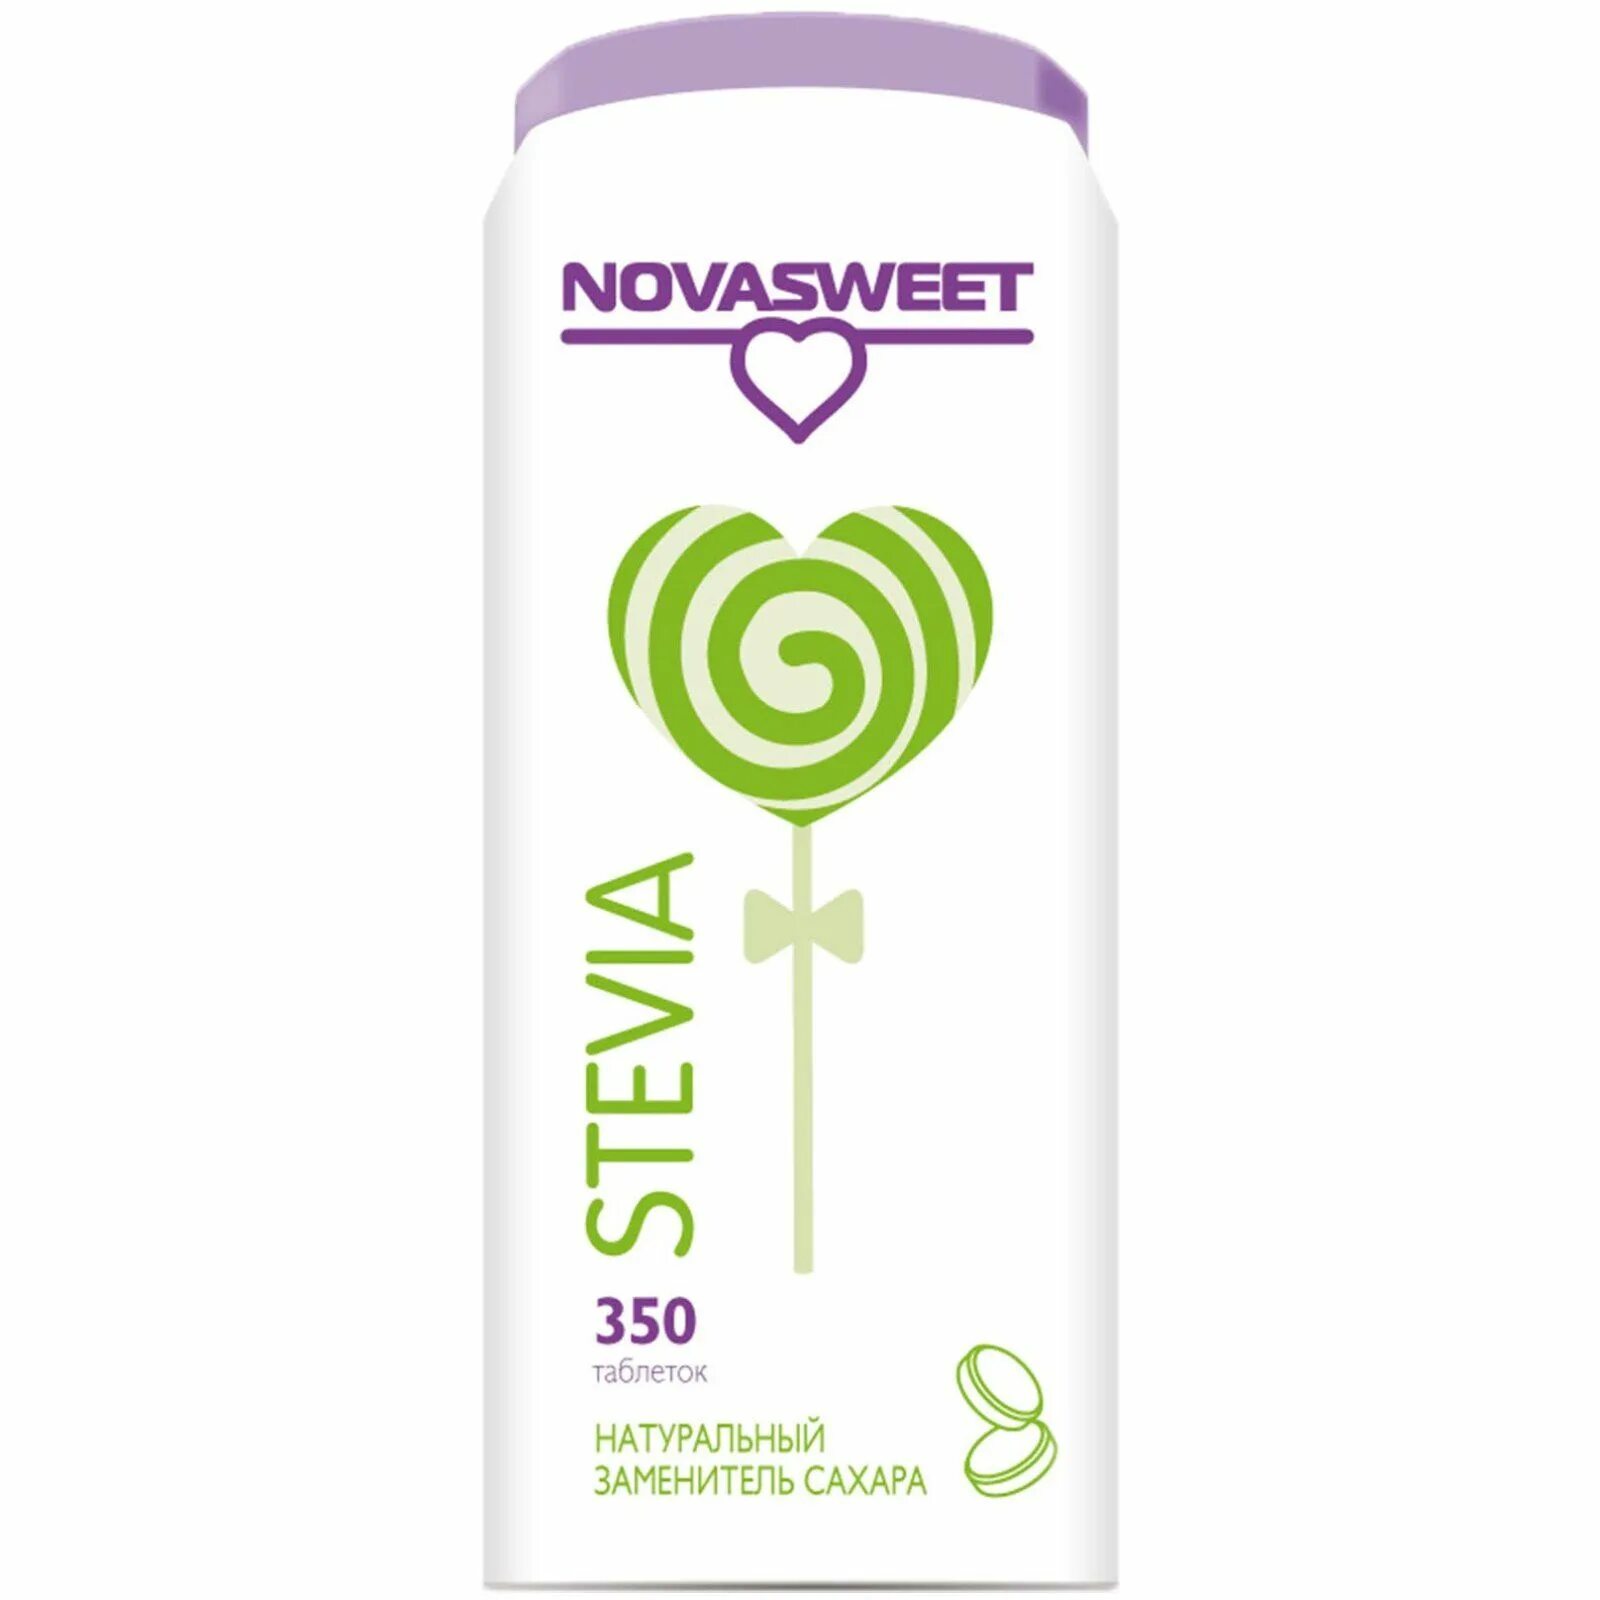 Novasweet заменитель сахара. Заменитель сахара NOVASWEET Stevia 350 таб.